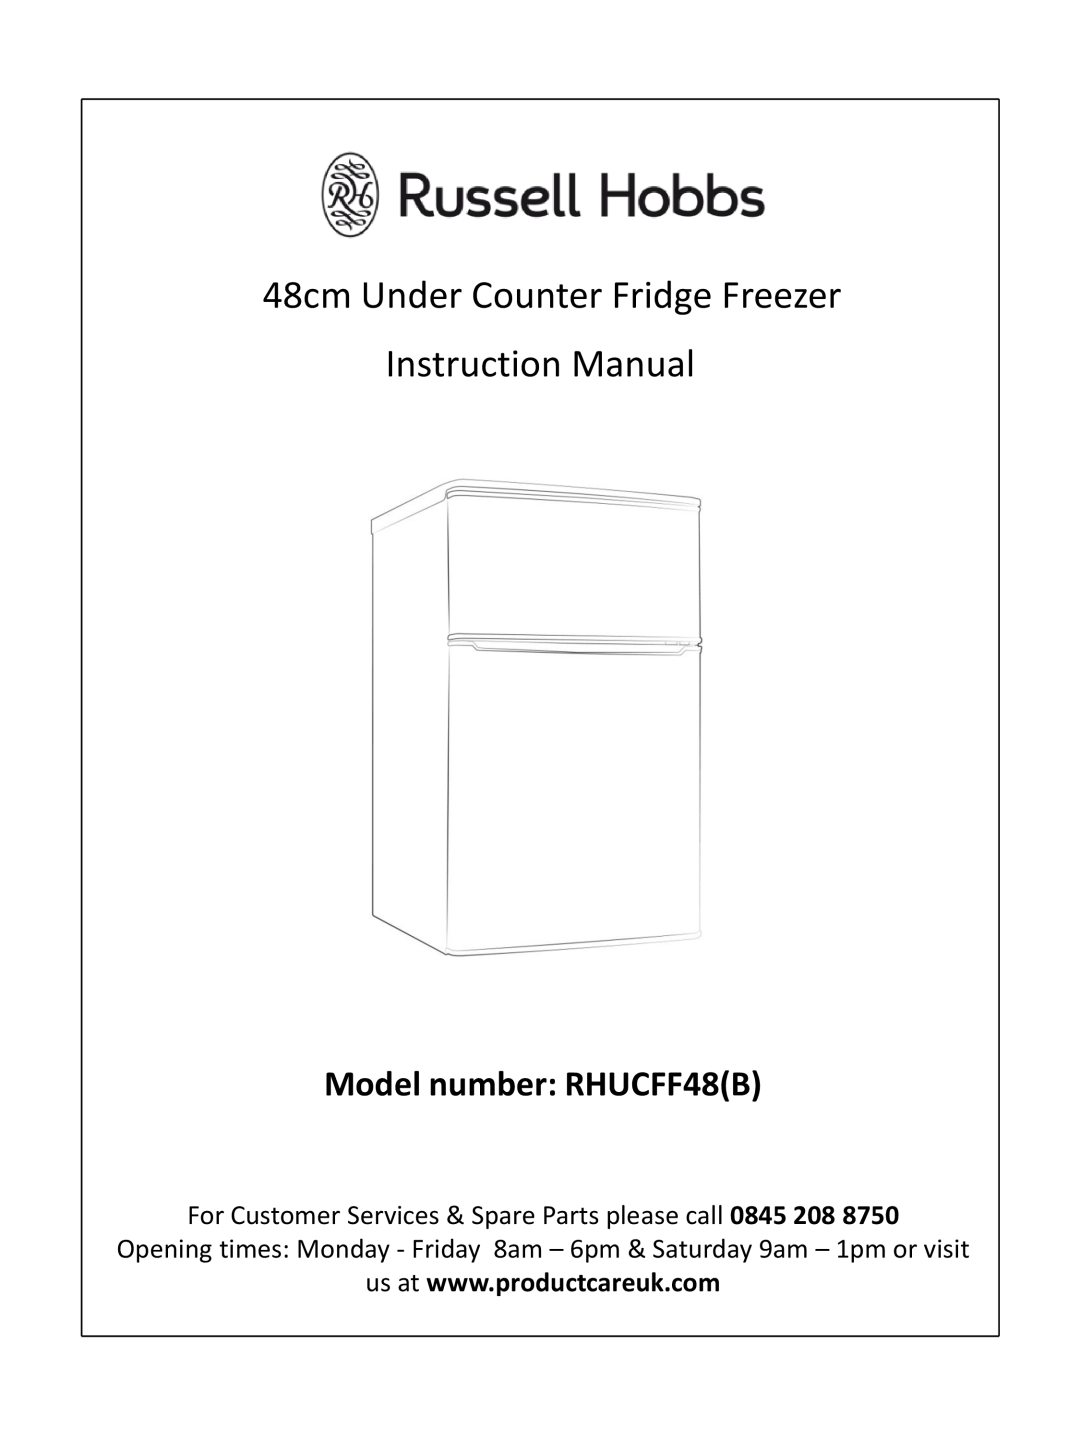 Russell Hobbs RHUCFF48(B) instruction manual 48cm Under Counter Fridge Freezer, Model number RHUCFF48B 